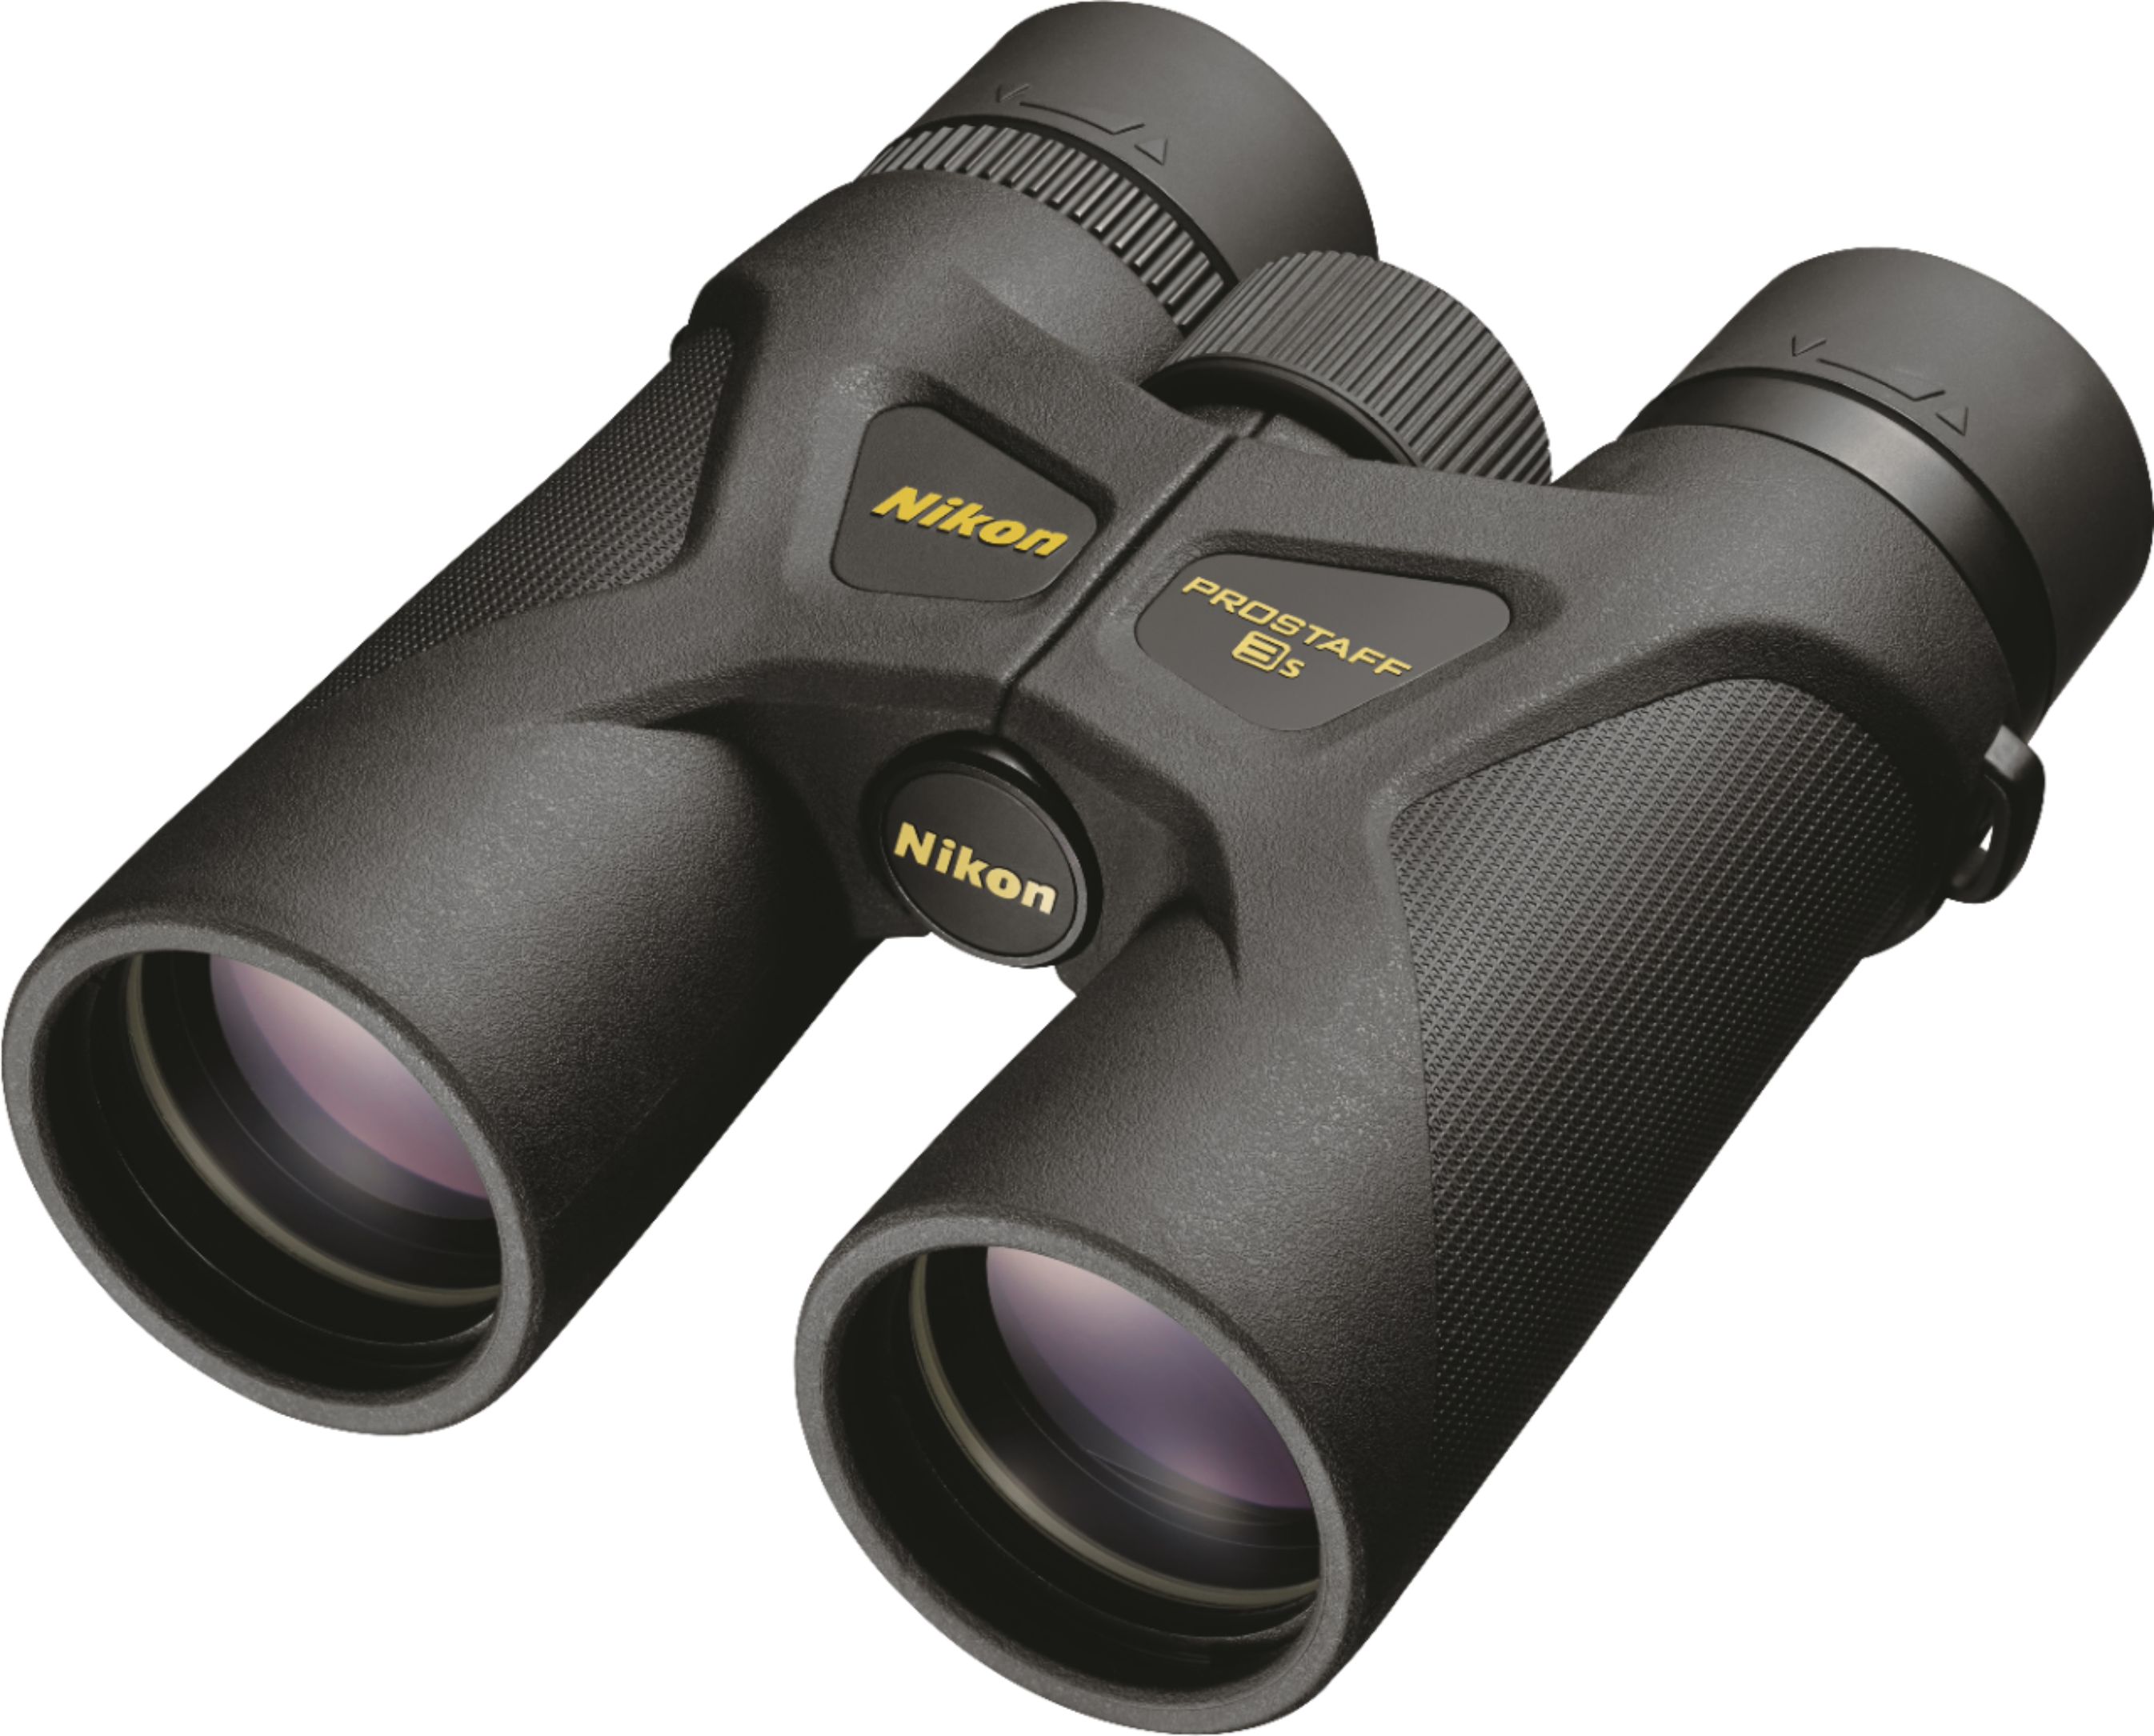 Angle View: Nikon - ProStaff 3S 10 x 42 Binoculars - Black